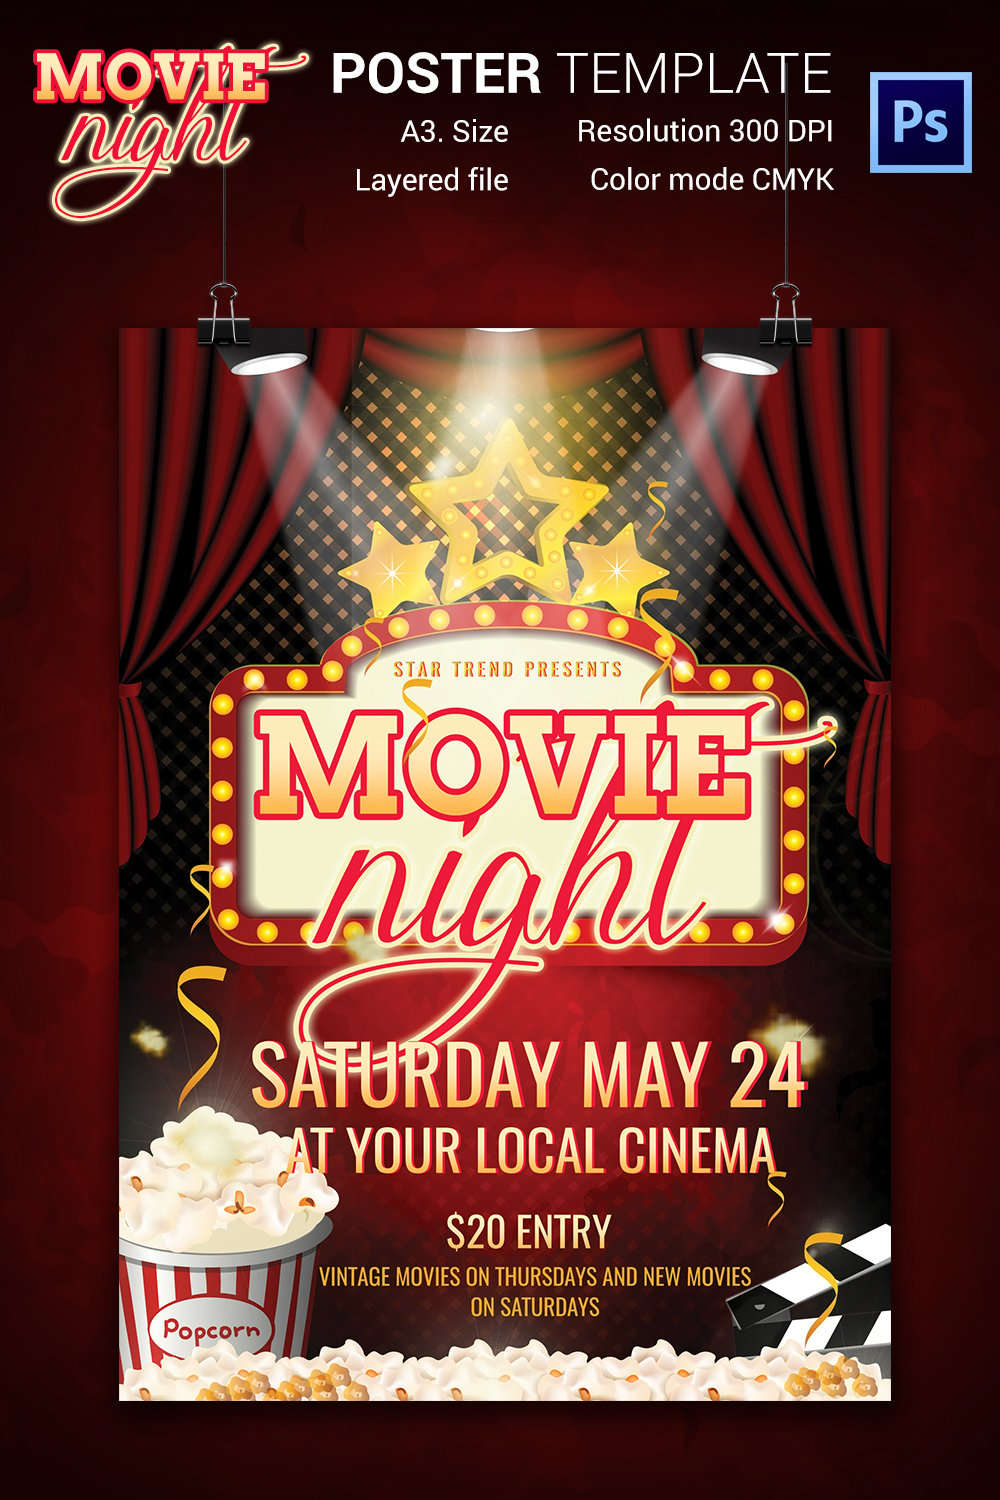 movie-night-flyer-template-25-free-jpg-psd-format-download-free-premium-templates